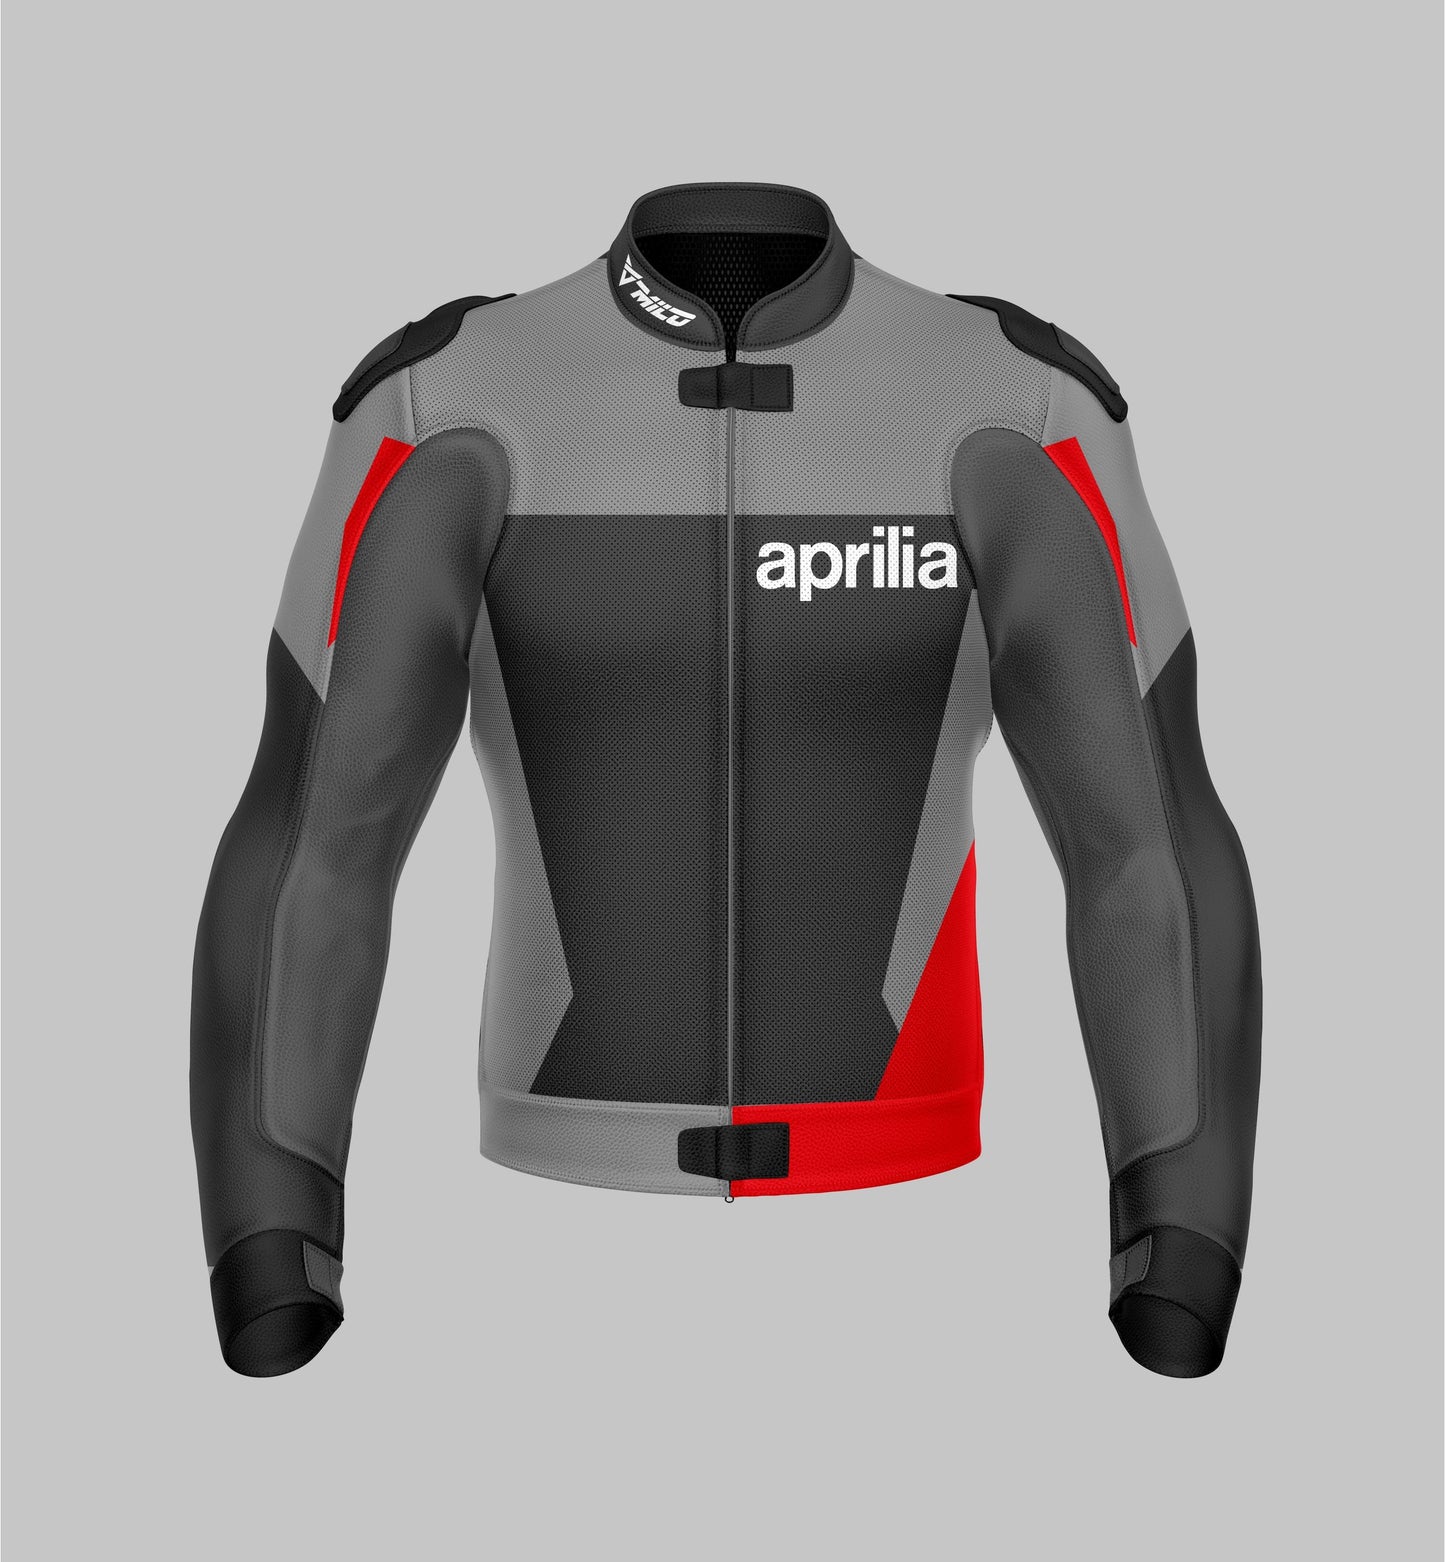 Aprilia Motorcycle Racing Perforated Leather Jacket